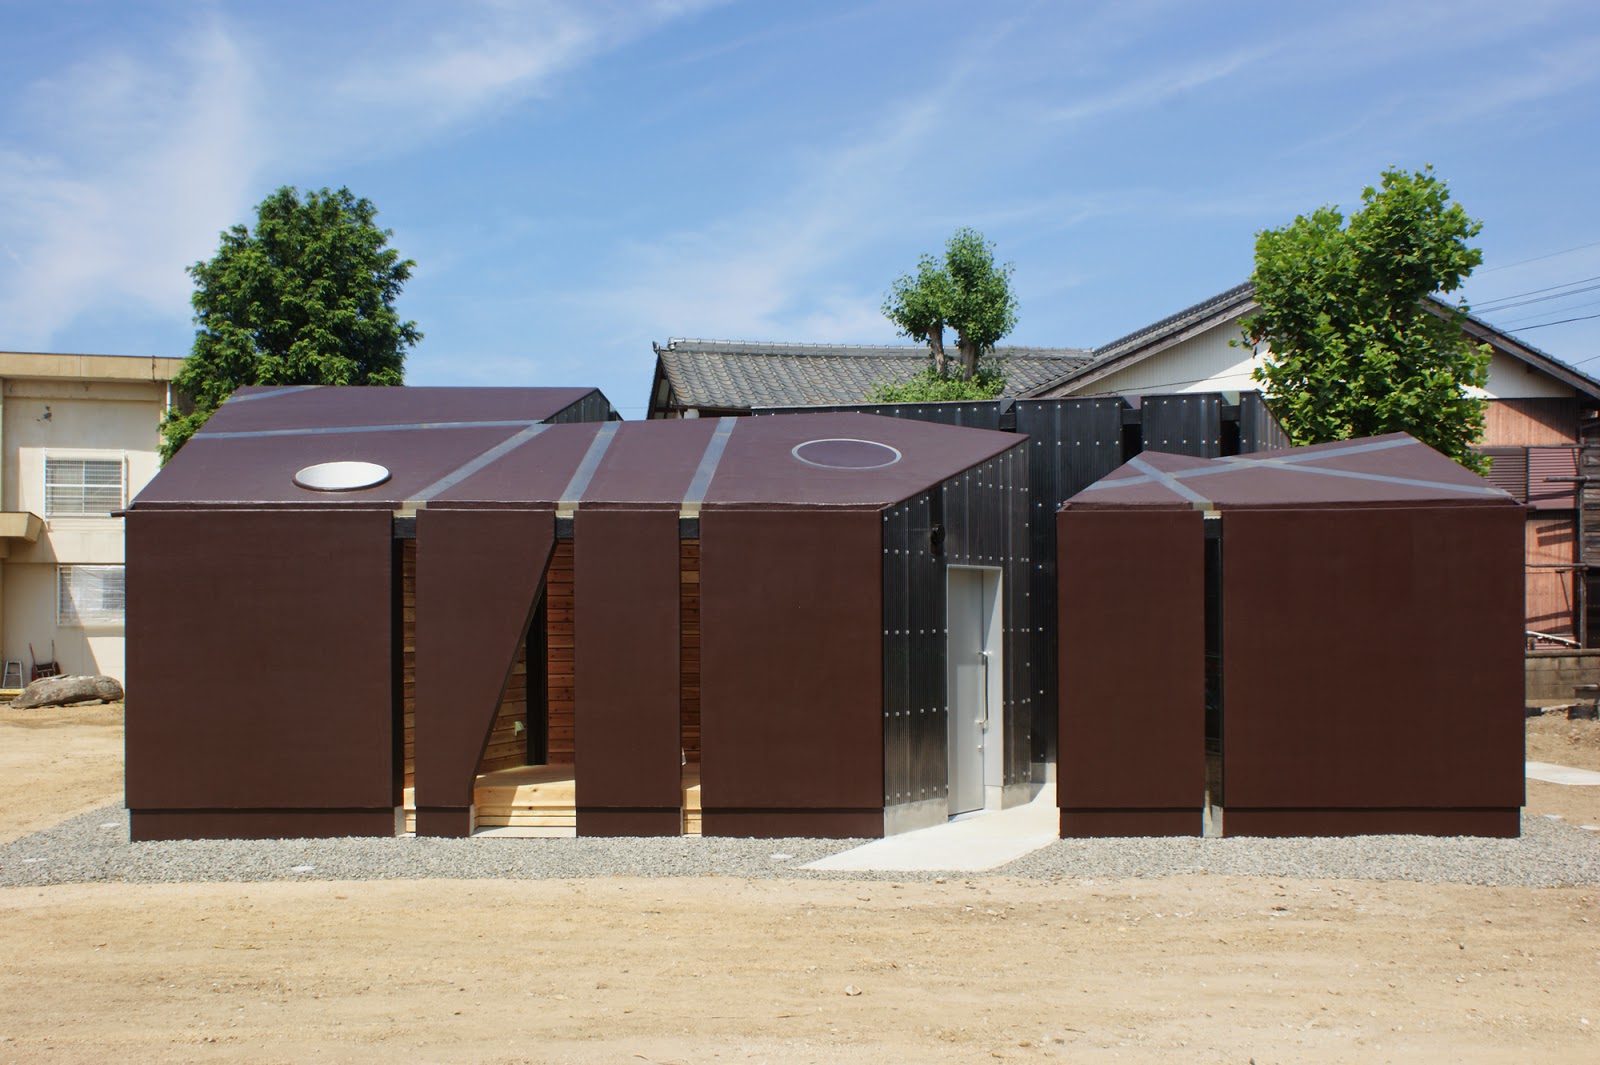 Sports News House Of Toilet Daigo Ishii Future Scape Architects